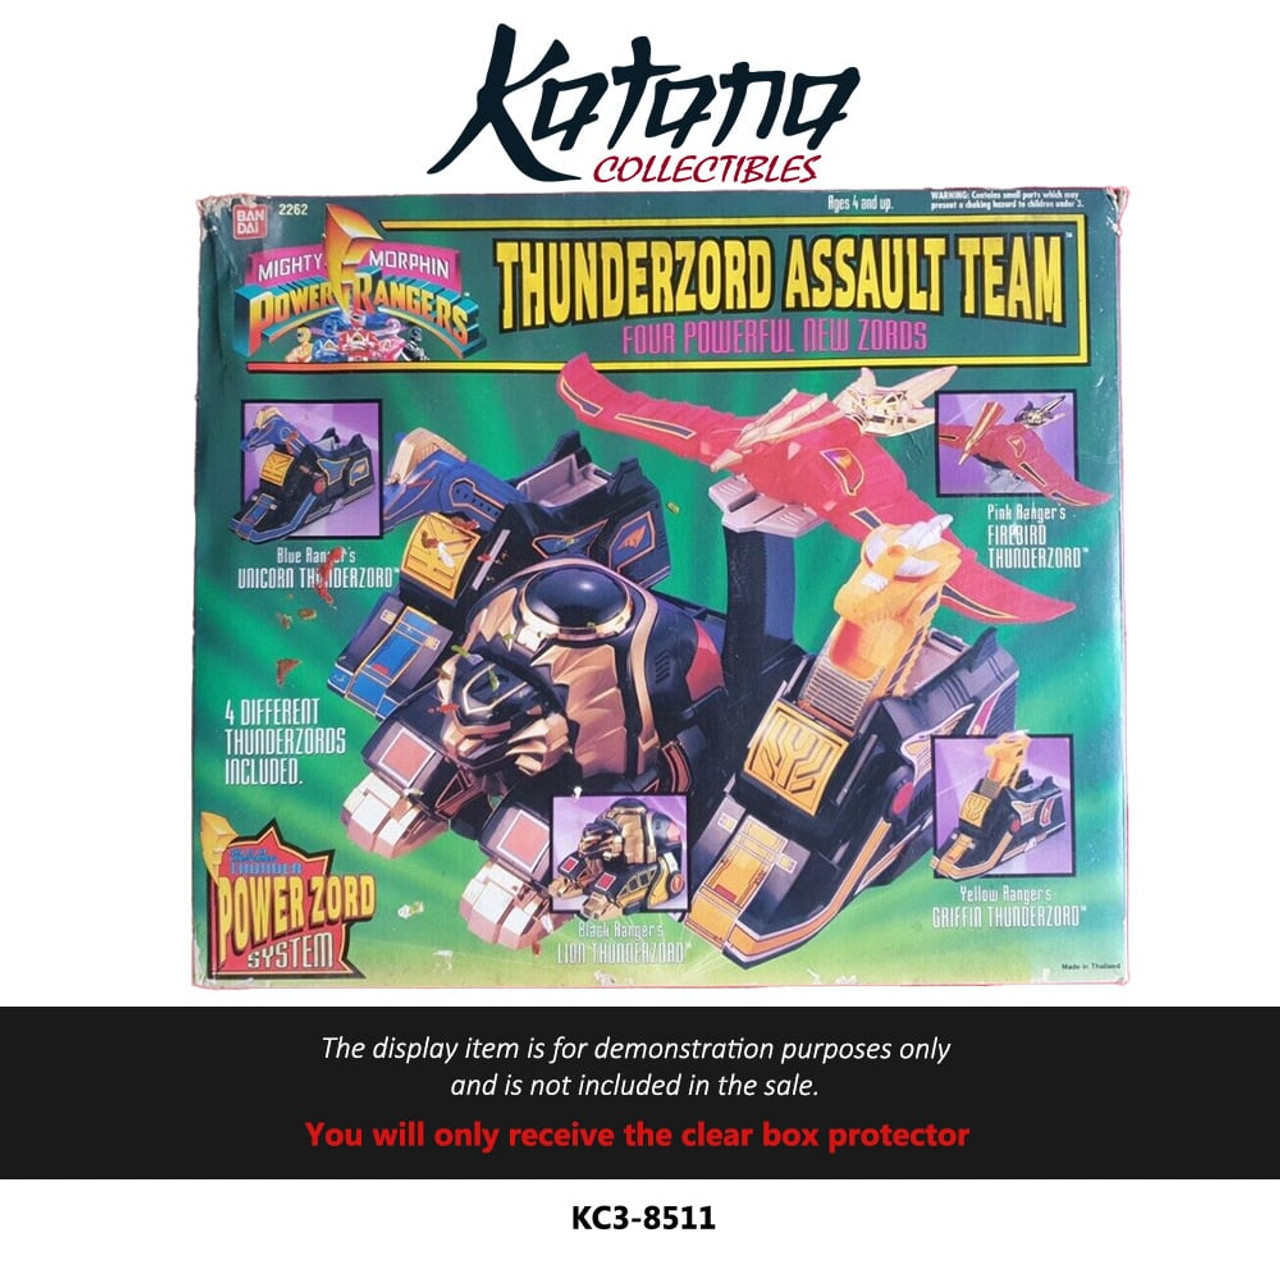 Katana Collectibles Protector For 1994 Power Rangers Thunderzord Assault Team